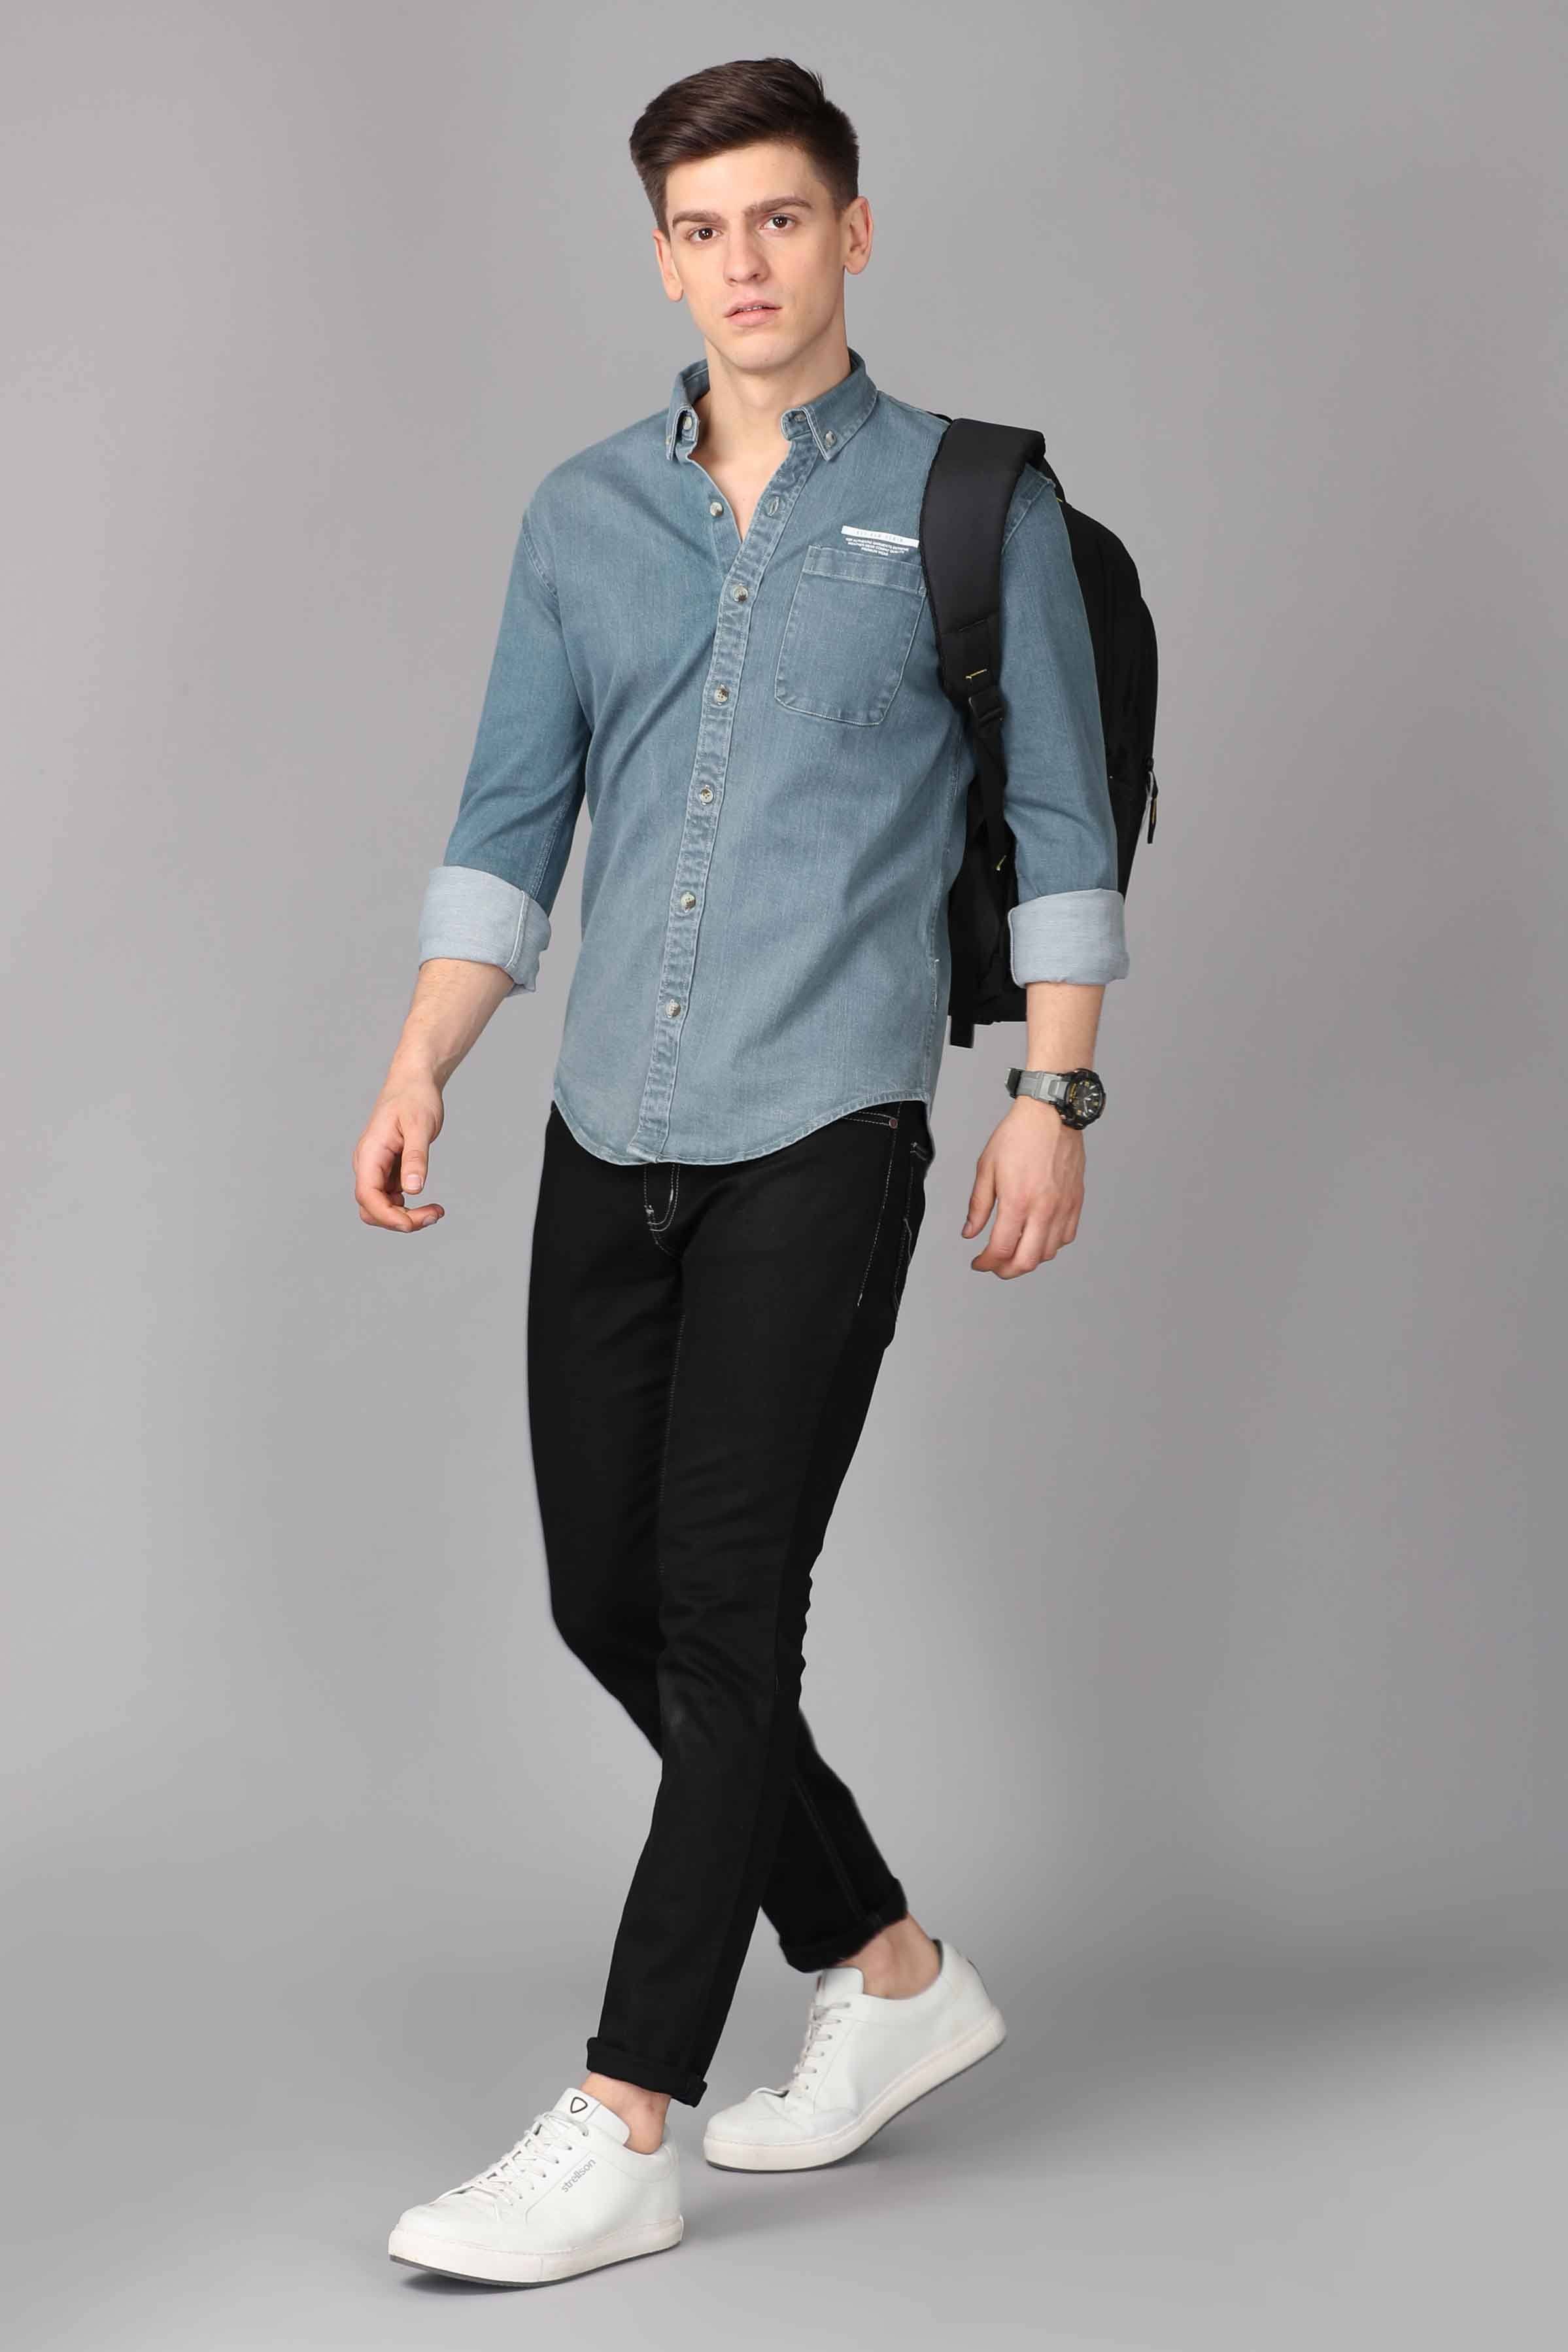 Sollobell Men Cutaway Collar Faded Light Blue Half Sleeve Casual Denim Shirt  (5X-Large) : Amazon.in: Clothing & Accessories